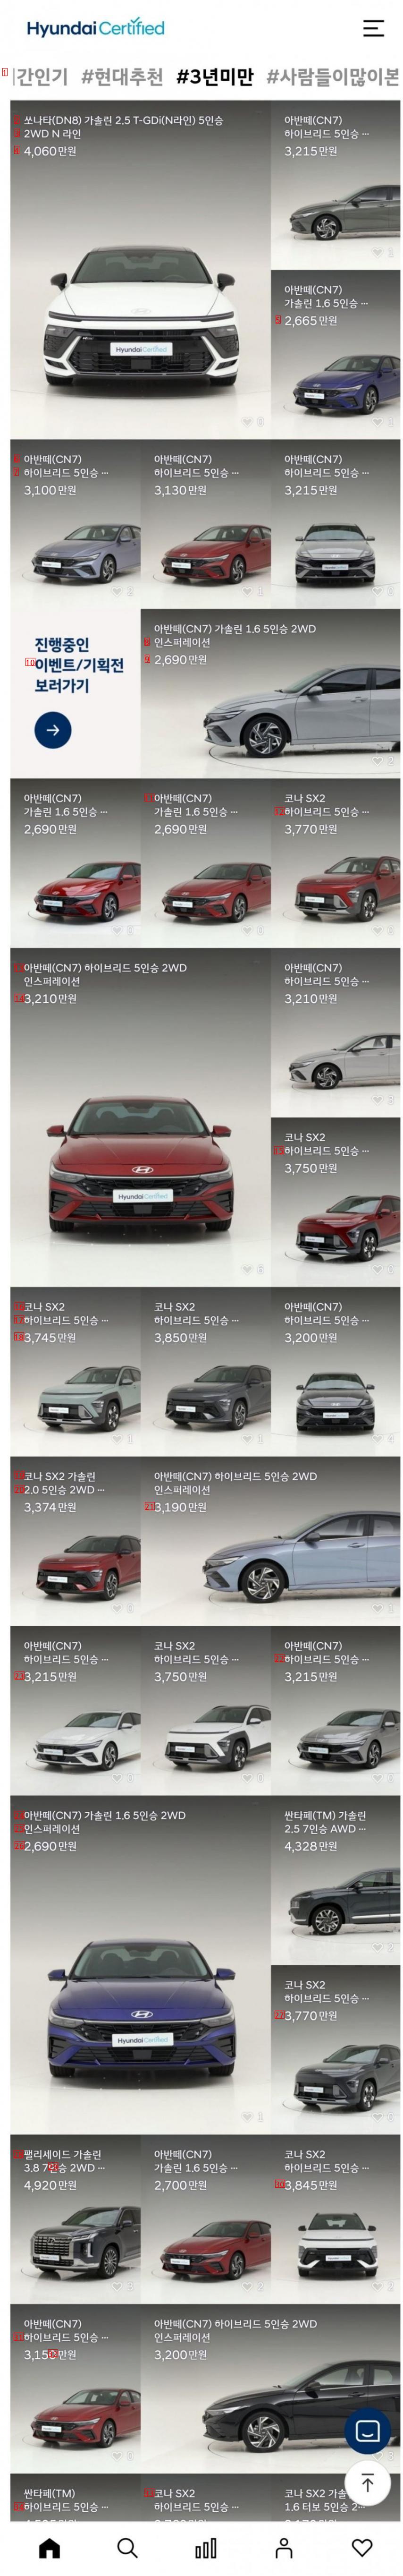 Current Status of Hyundai Motor's Used Car Industry